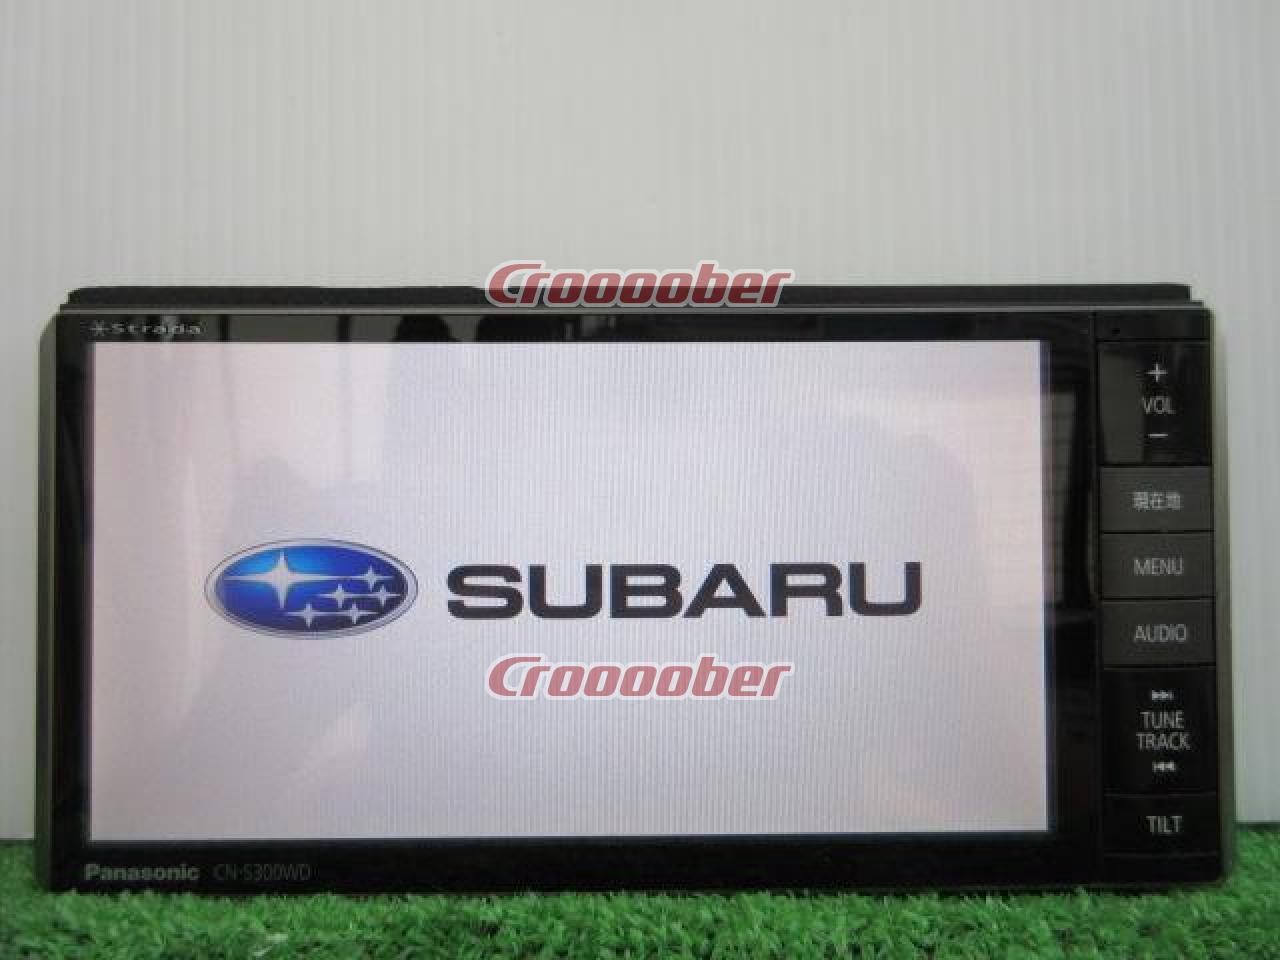 Panasonic SUBARU CN-S300WDFA | www.innoveering.net